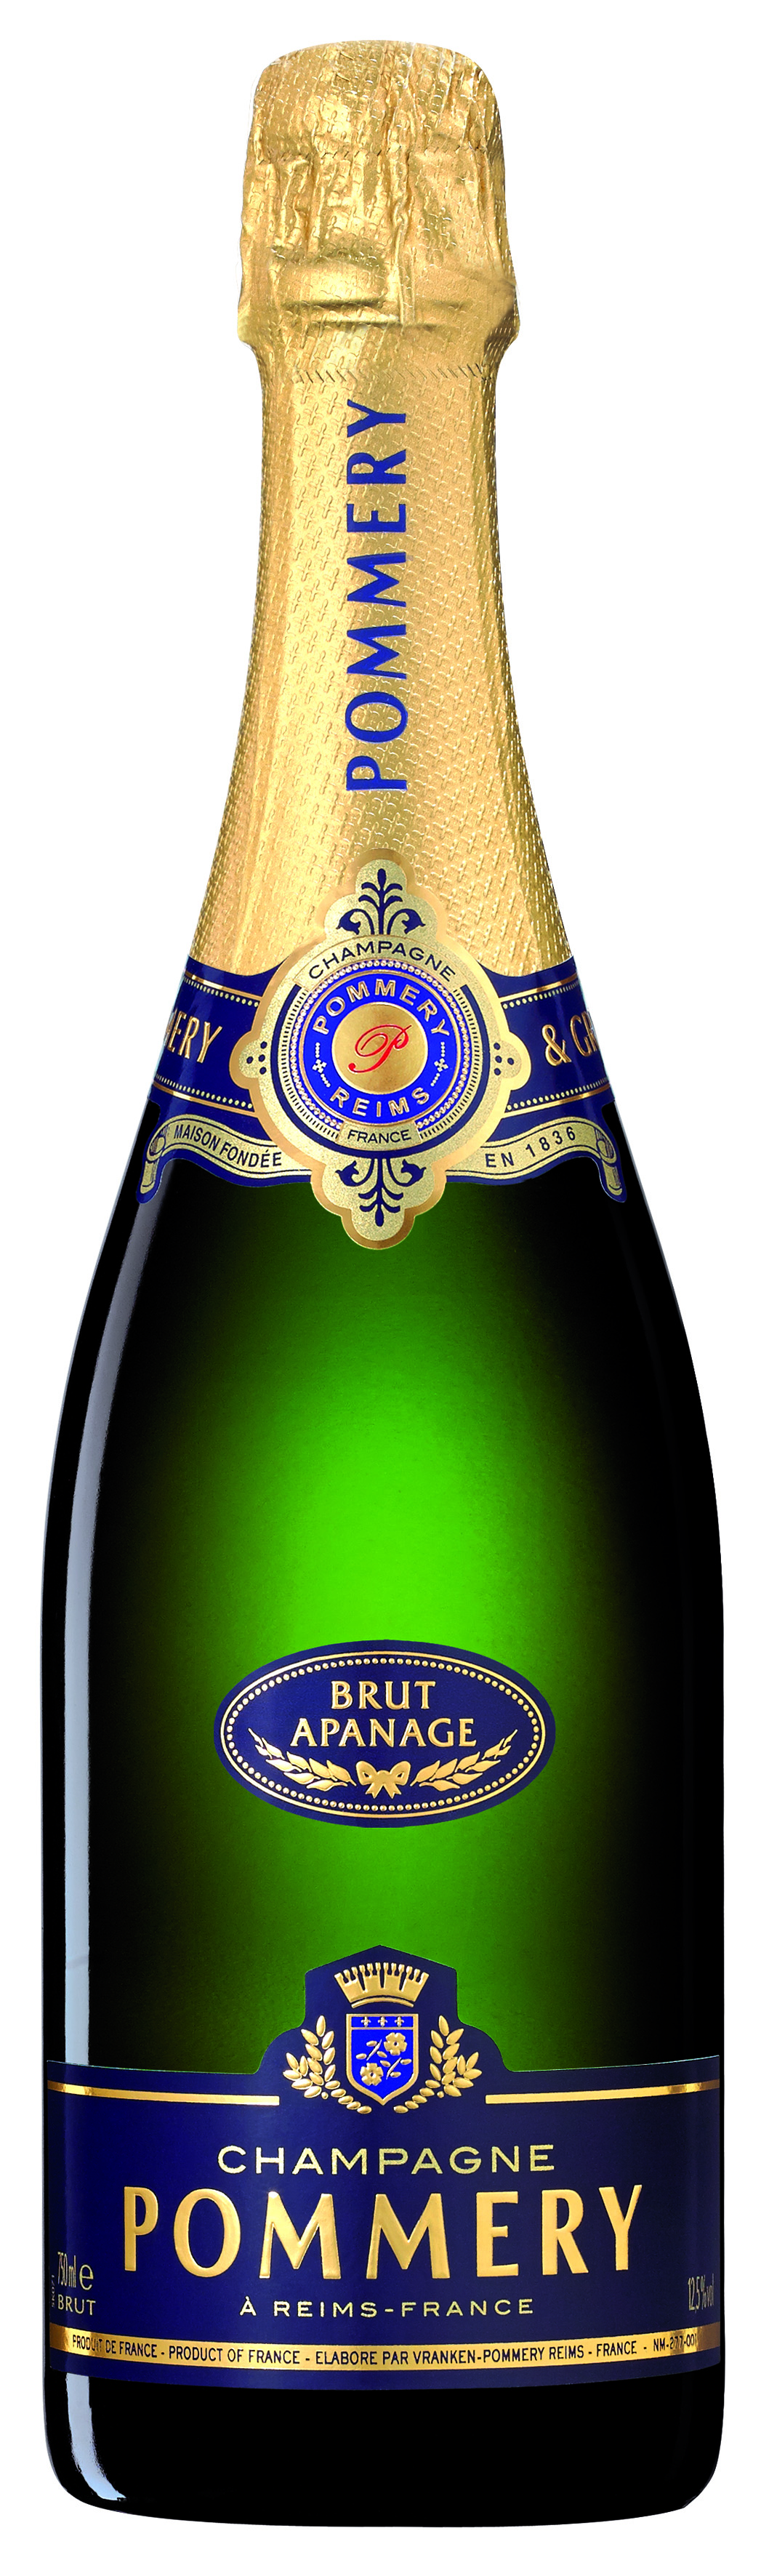 Pommery Champagne Apanage Brut 0,75l